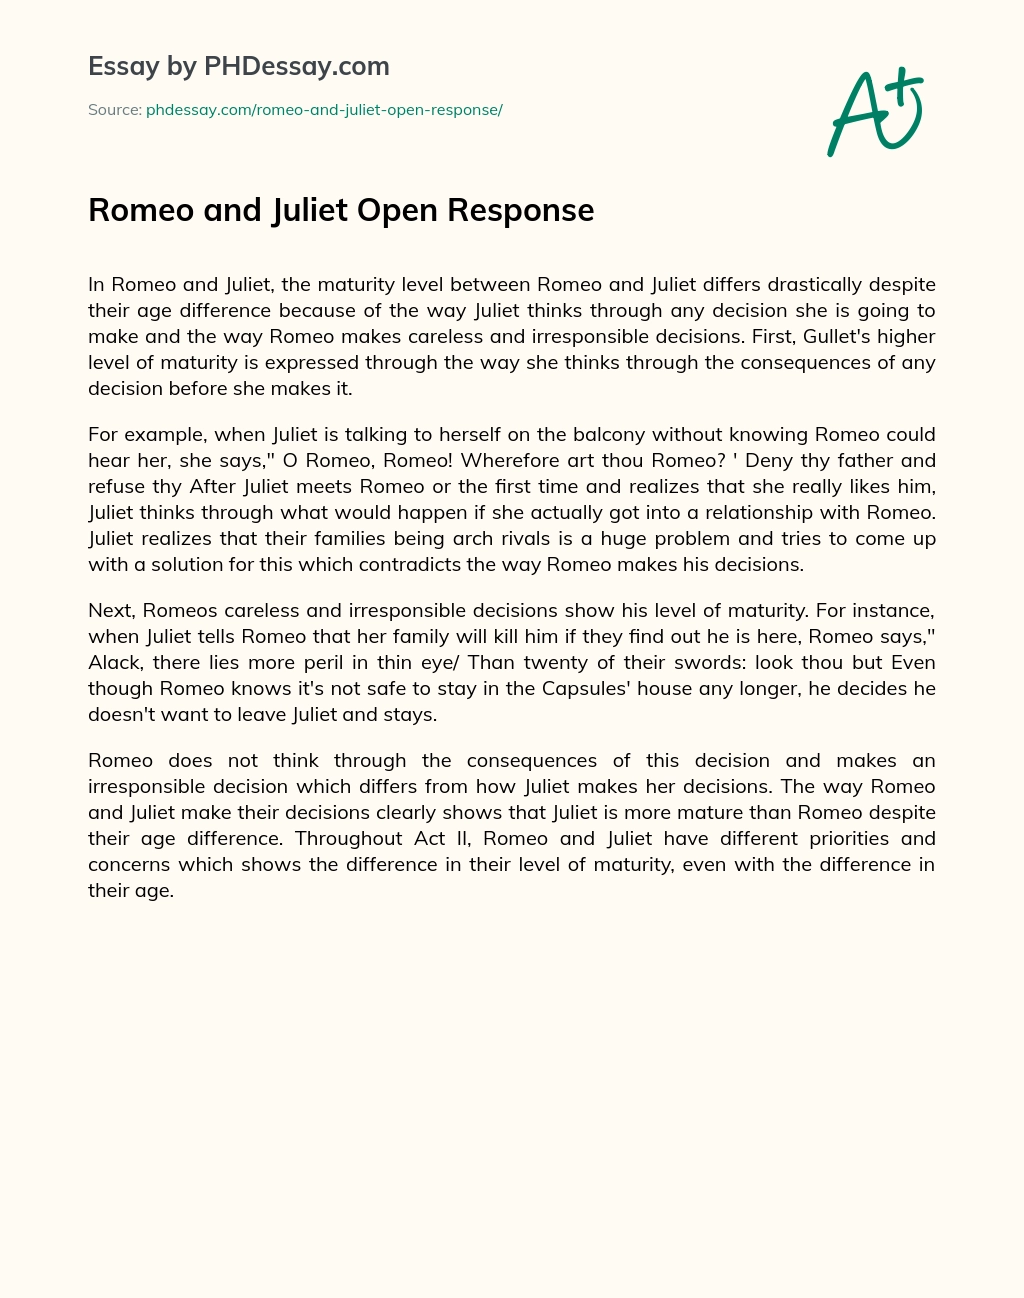 Romeo and Juliet Open Response essay